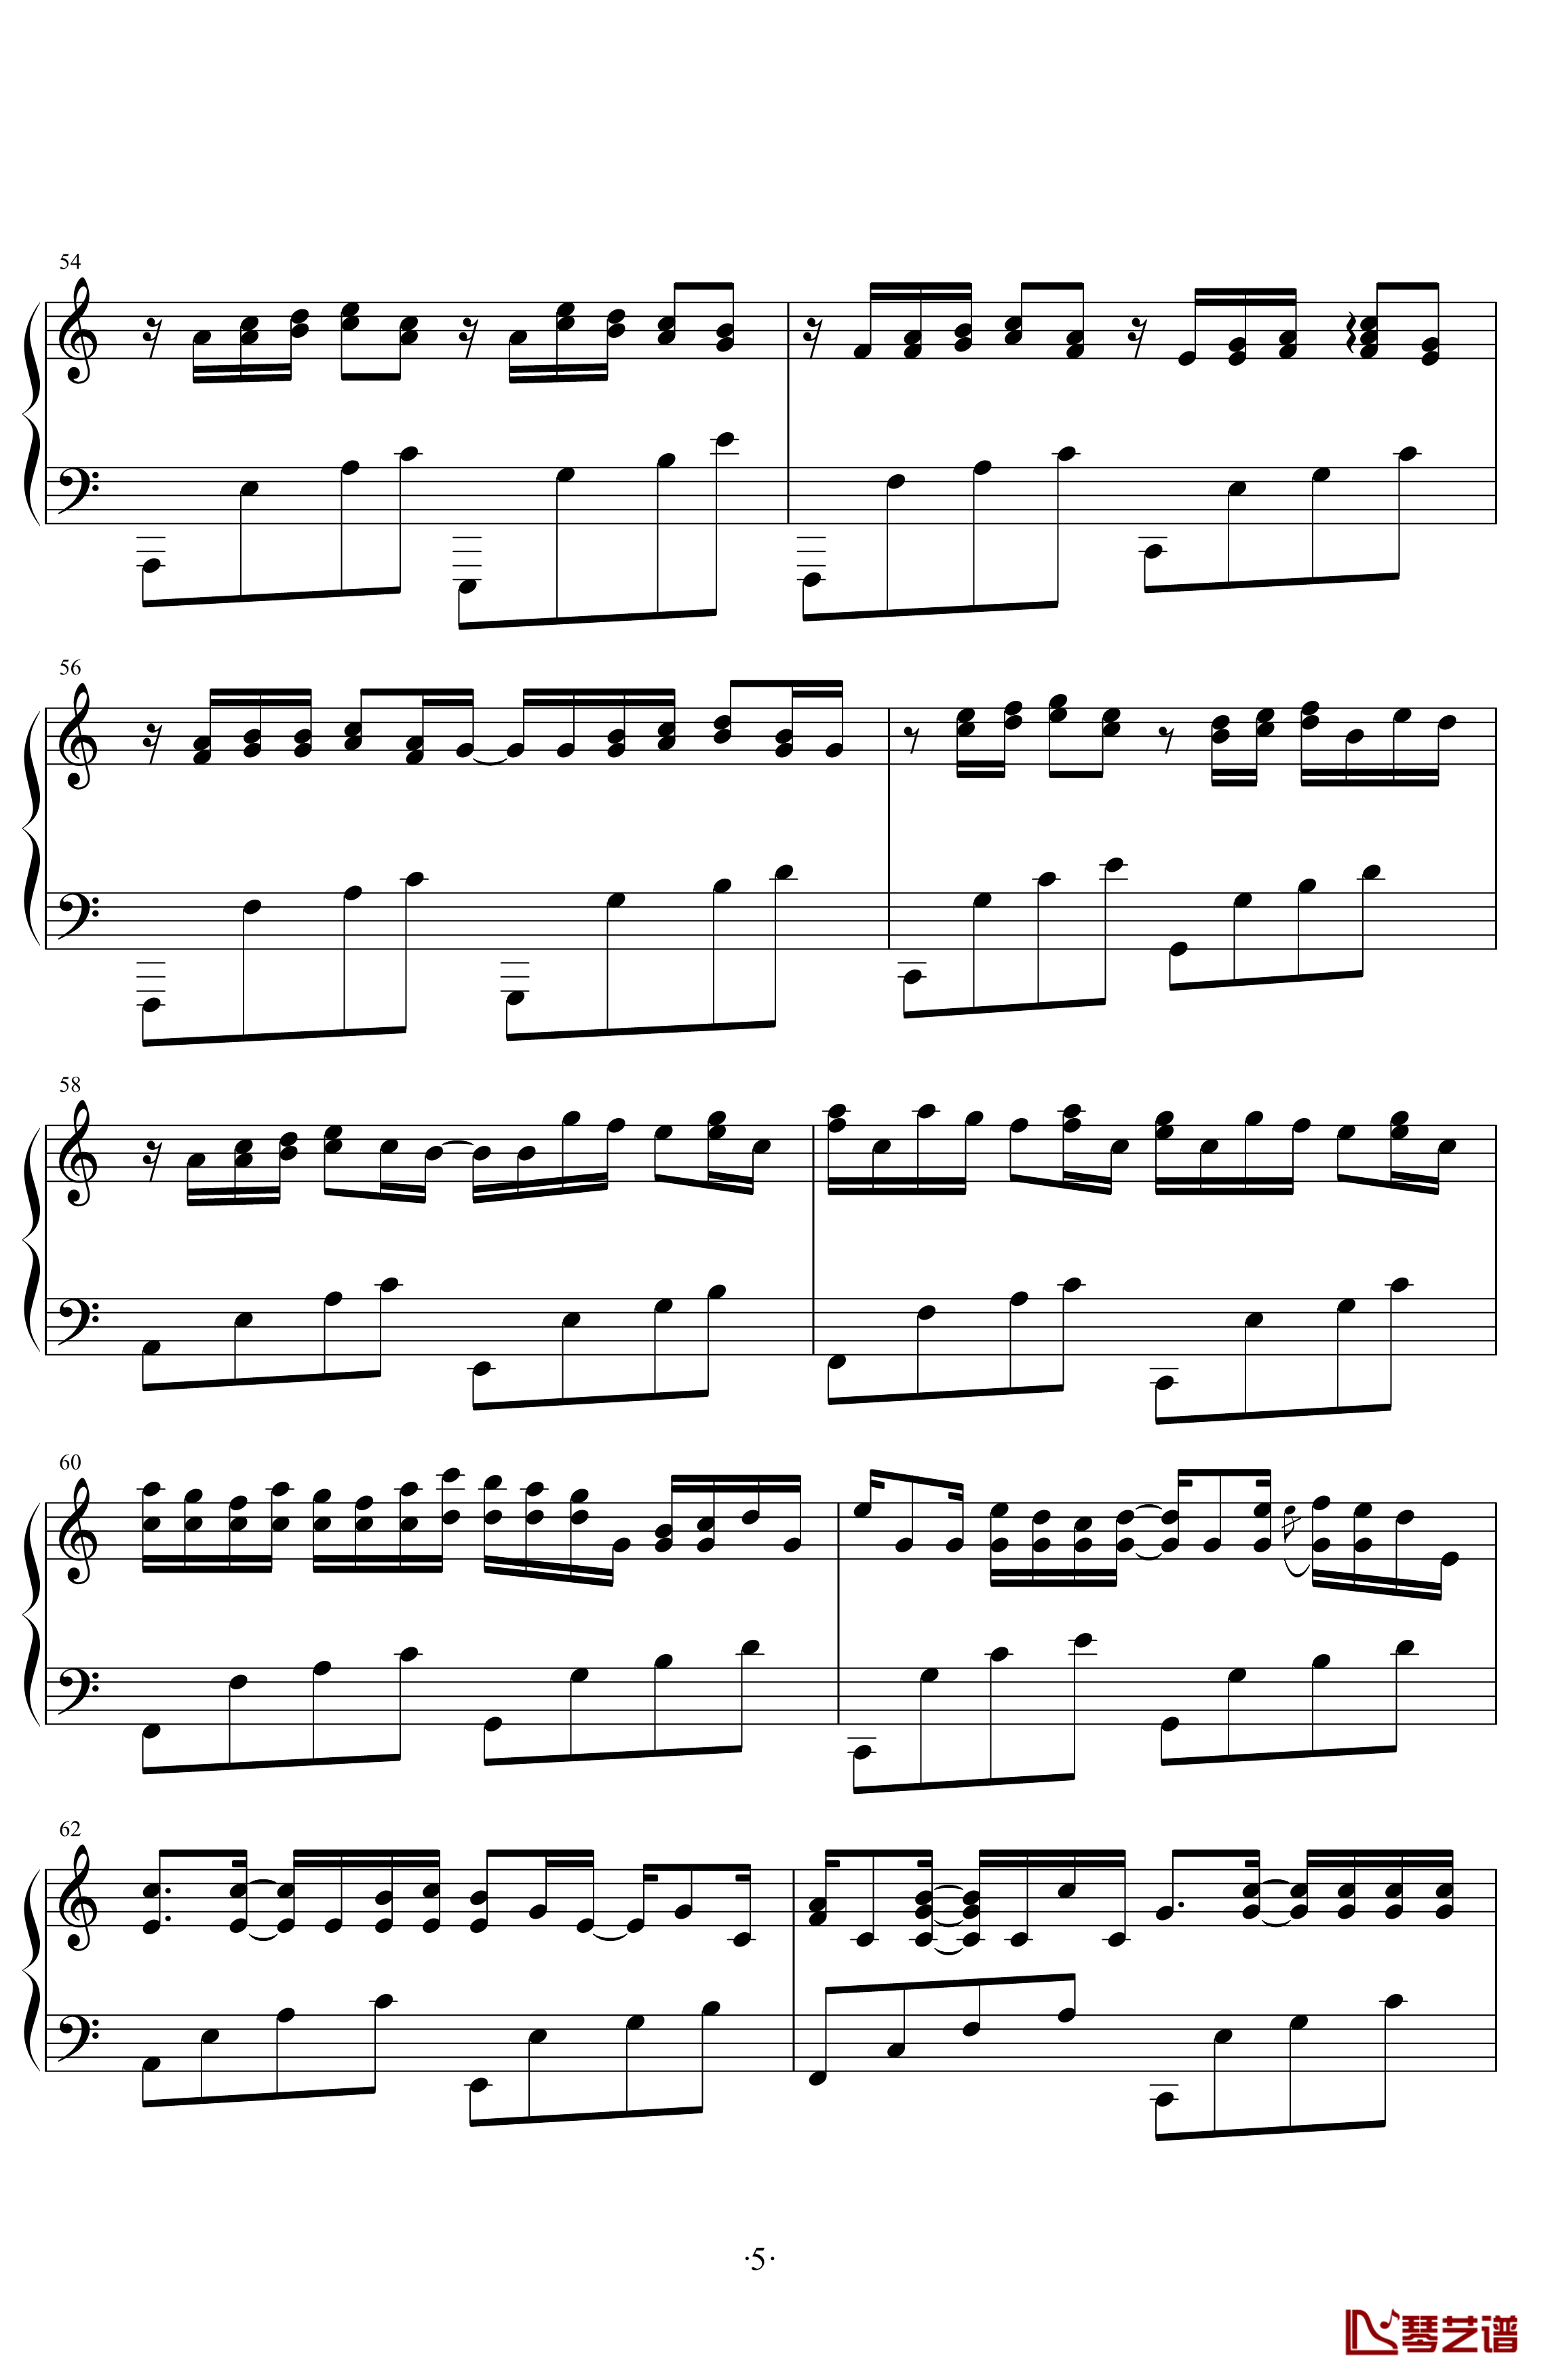 卡农变奏曲钢琴谱-Variations on the Canon by Pachelbel V.L.最终定本-George Winston5